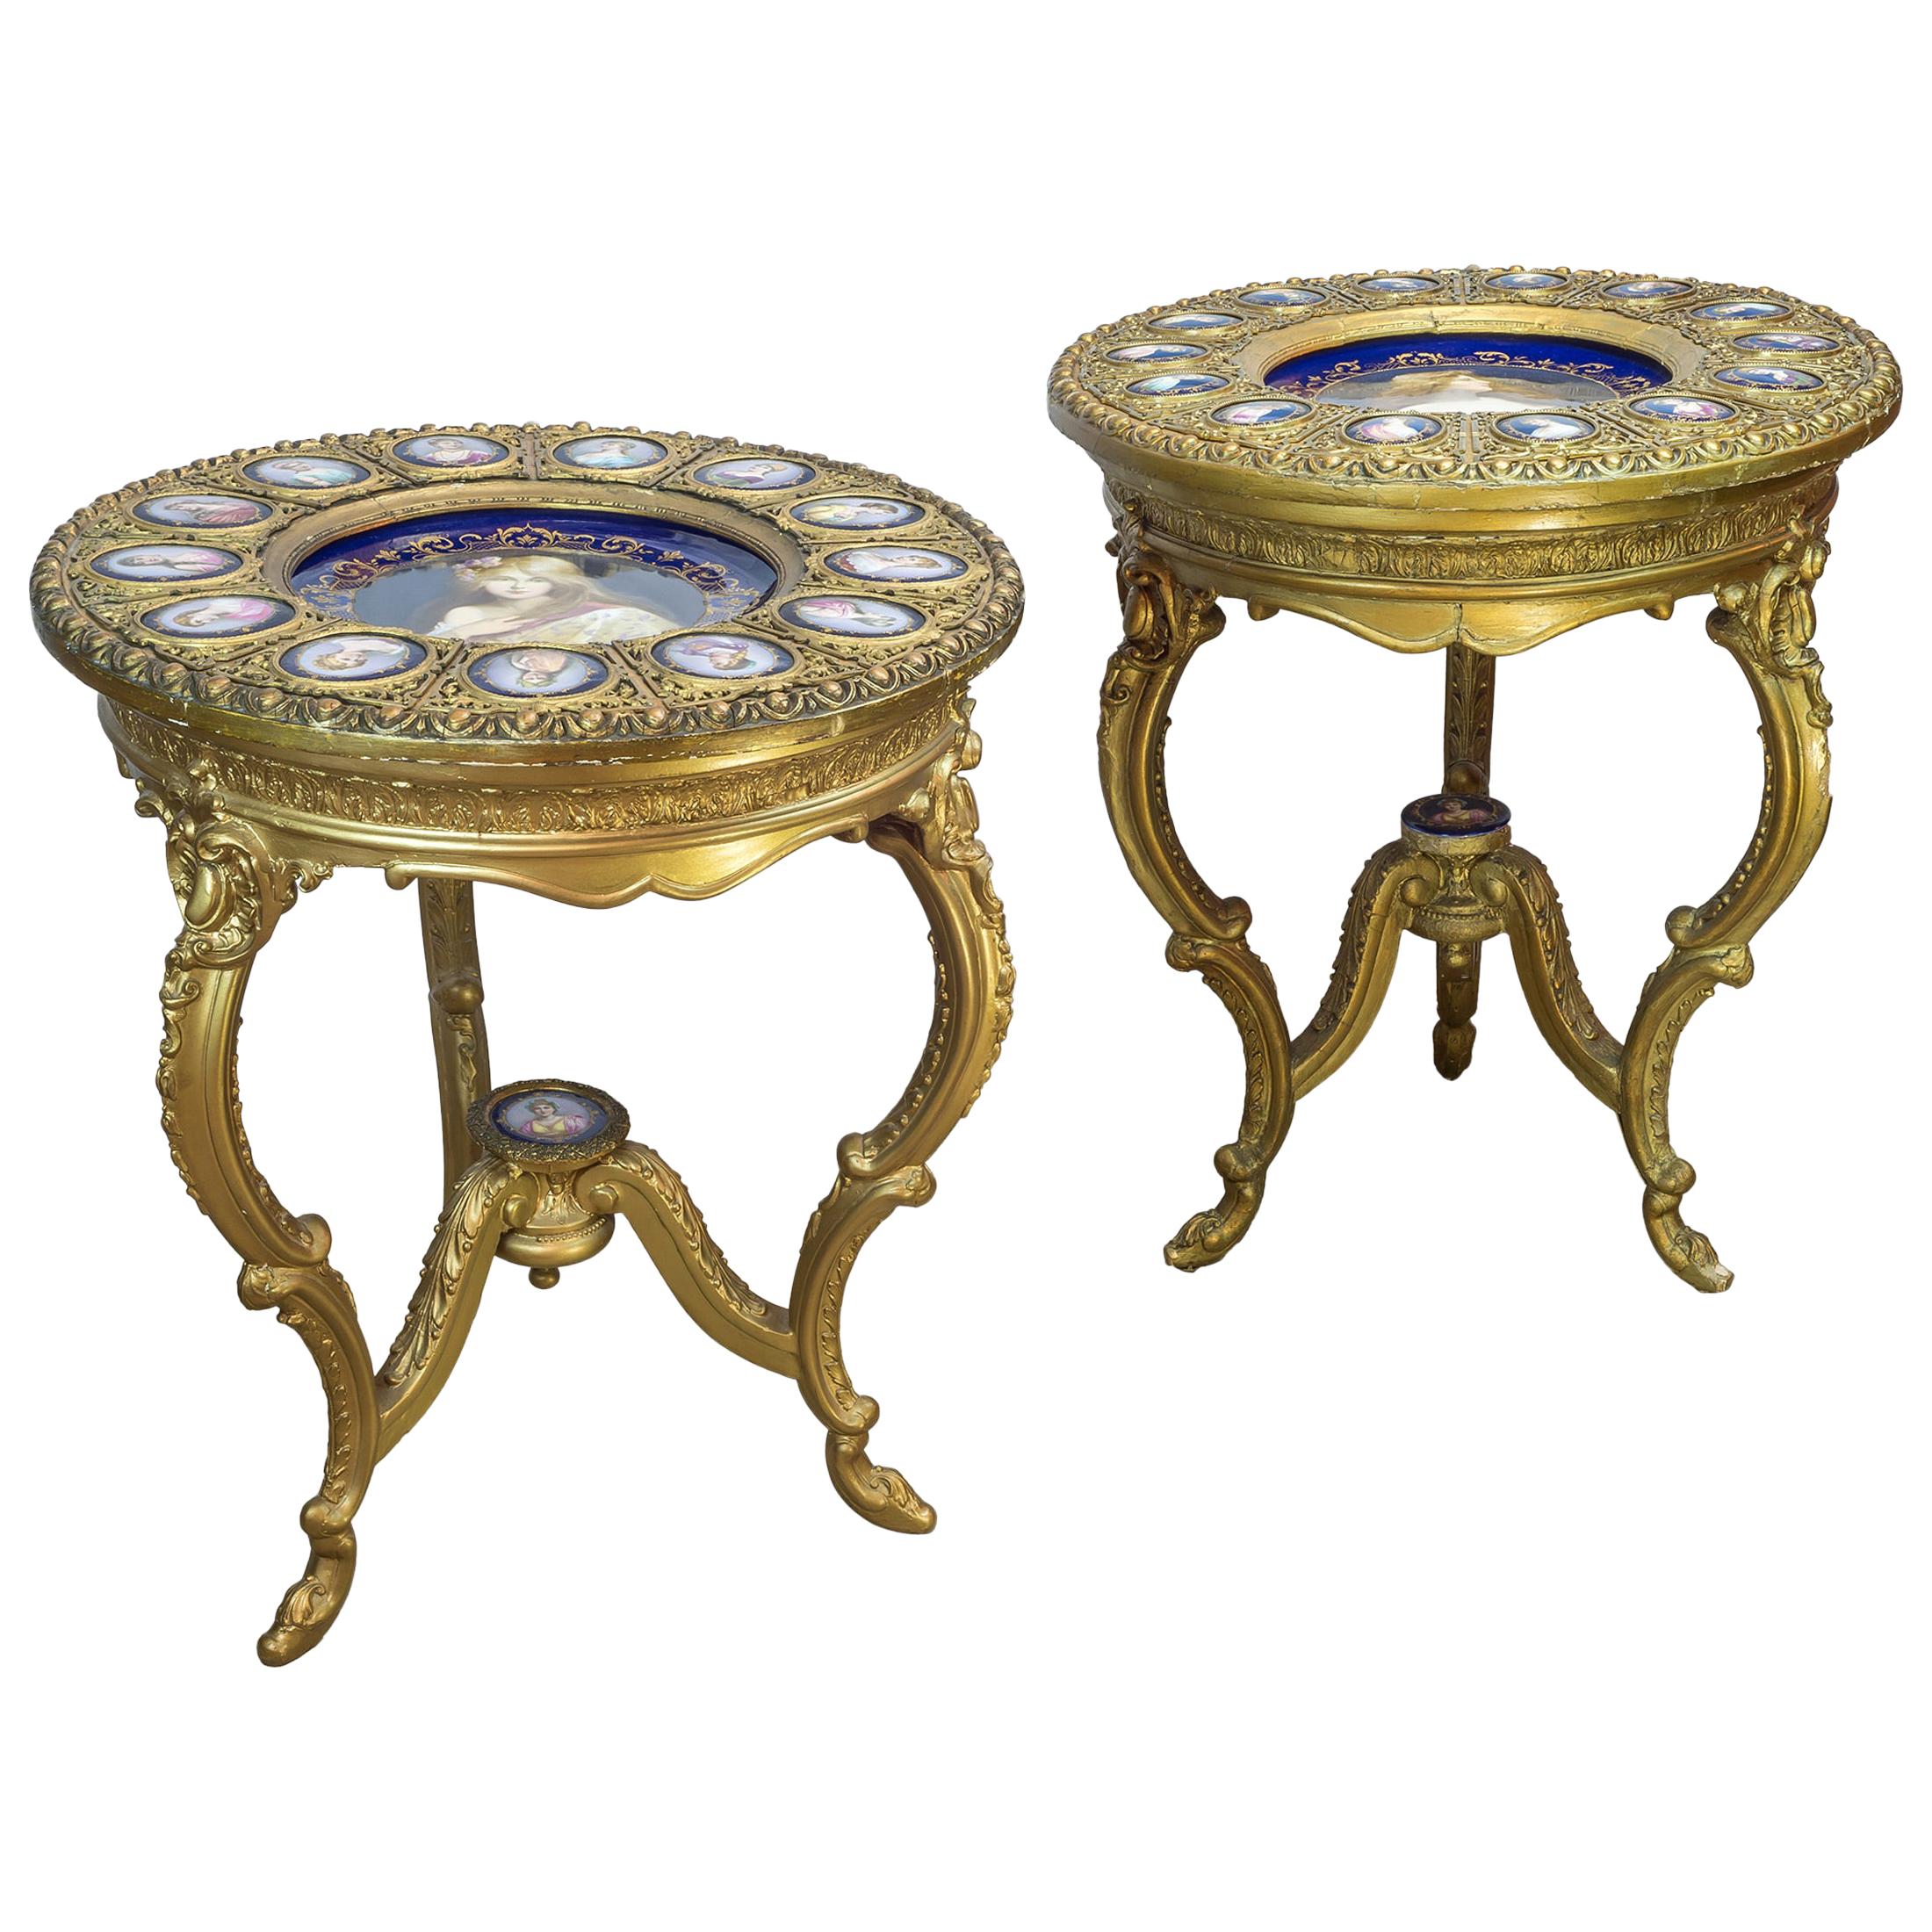 Pair of Austrian Royal Vienna Three-Legged Gilt Wood and Porcelain Parlor Table